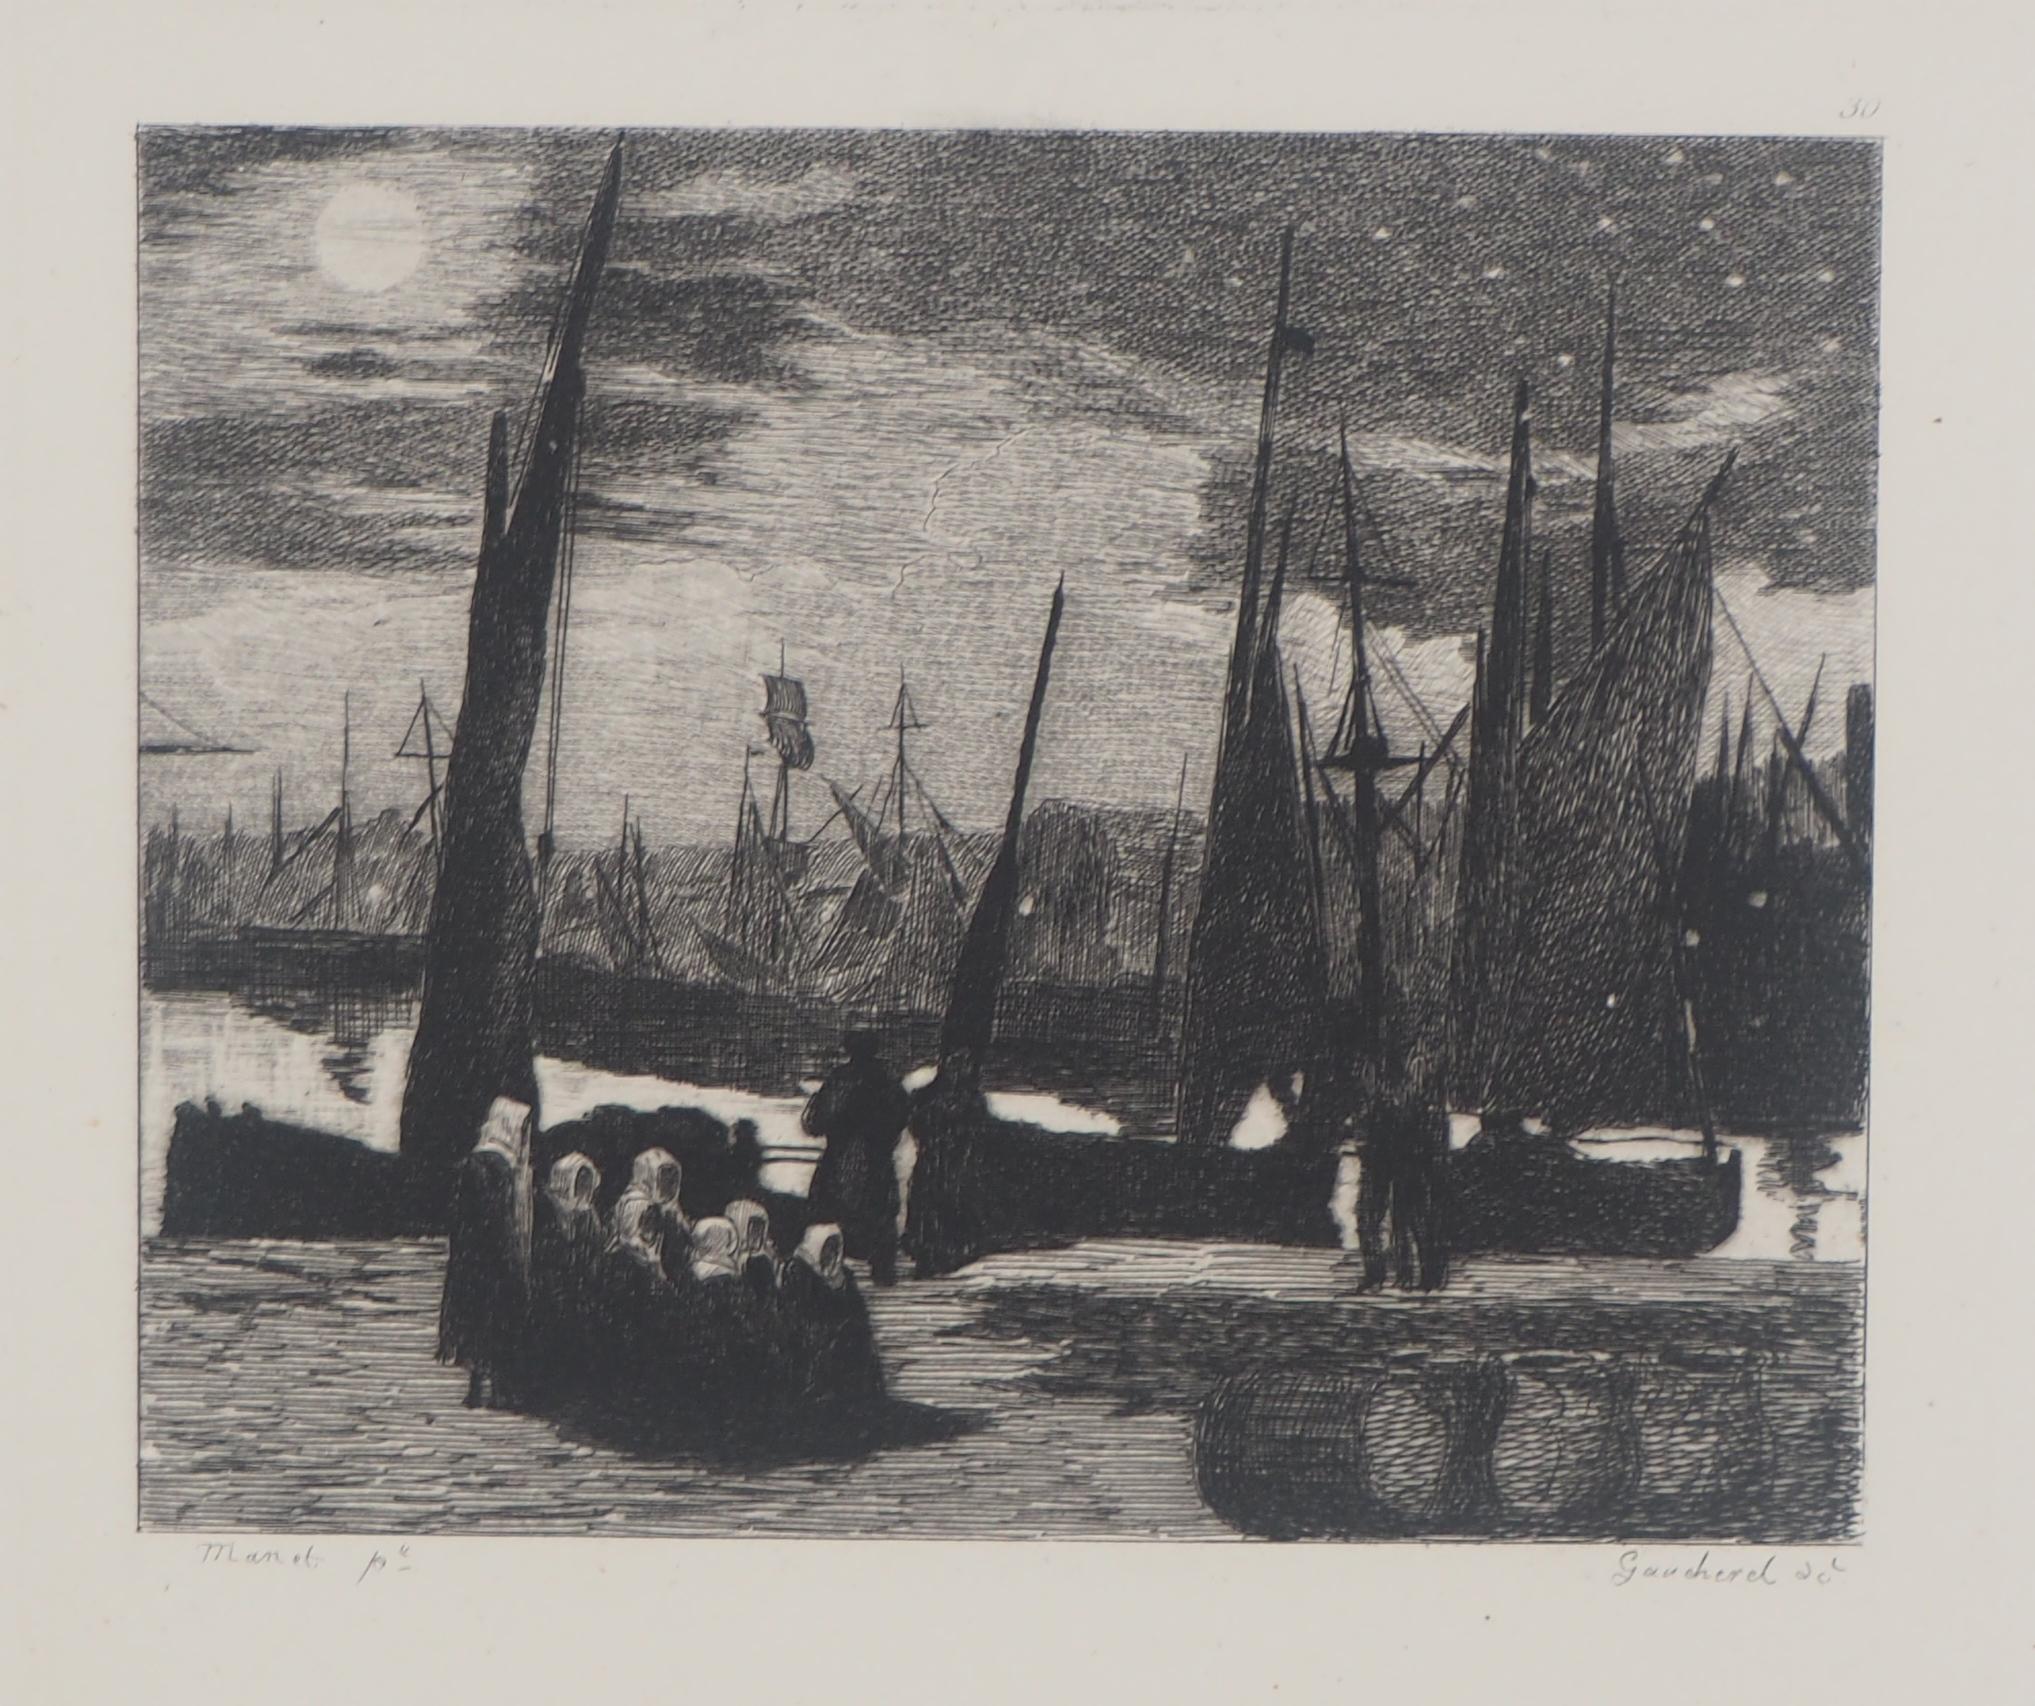 Edouard Manet Landscape Print - The Harbour, Sailboats - Original etching - Ed. Durand Ruel, 1873